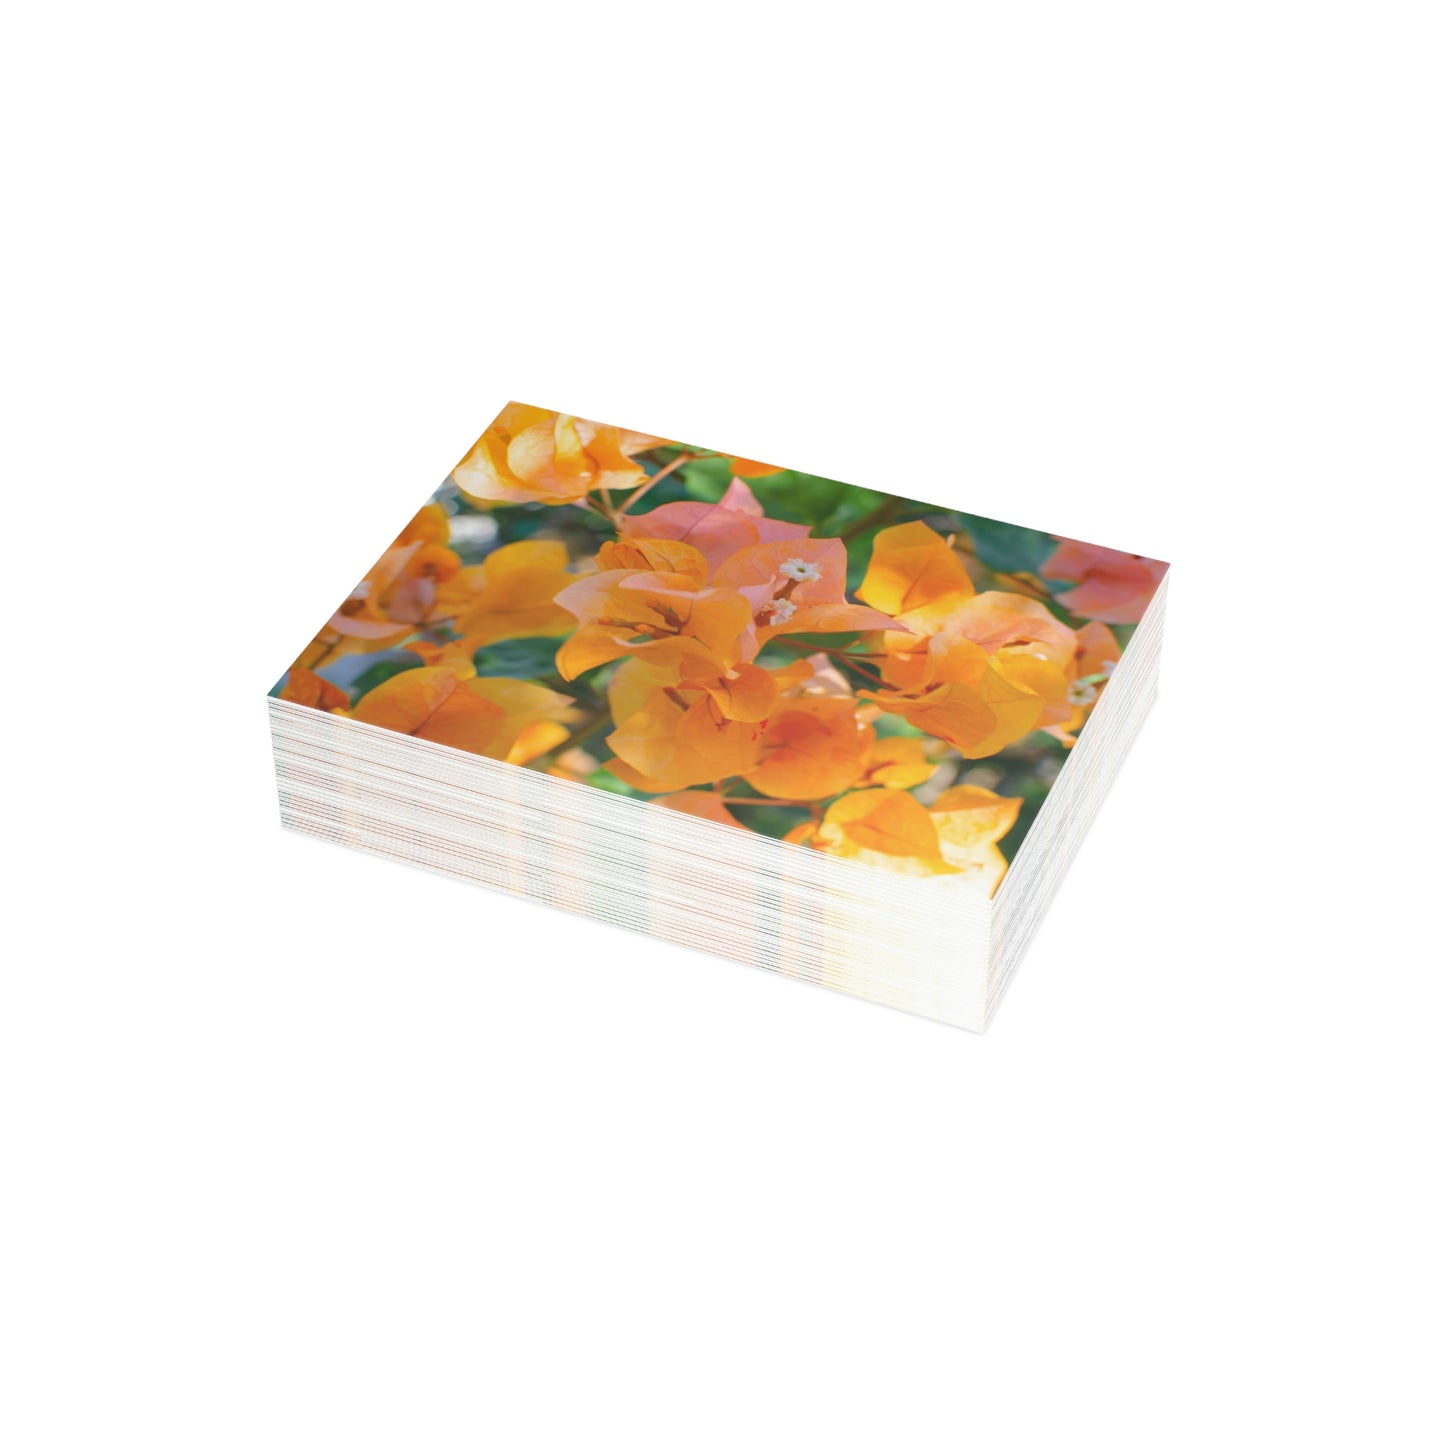 Flowers 29 Greeting Card Bundles (envelopes not included)